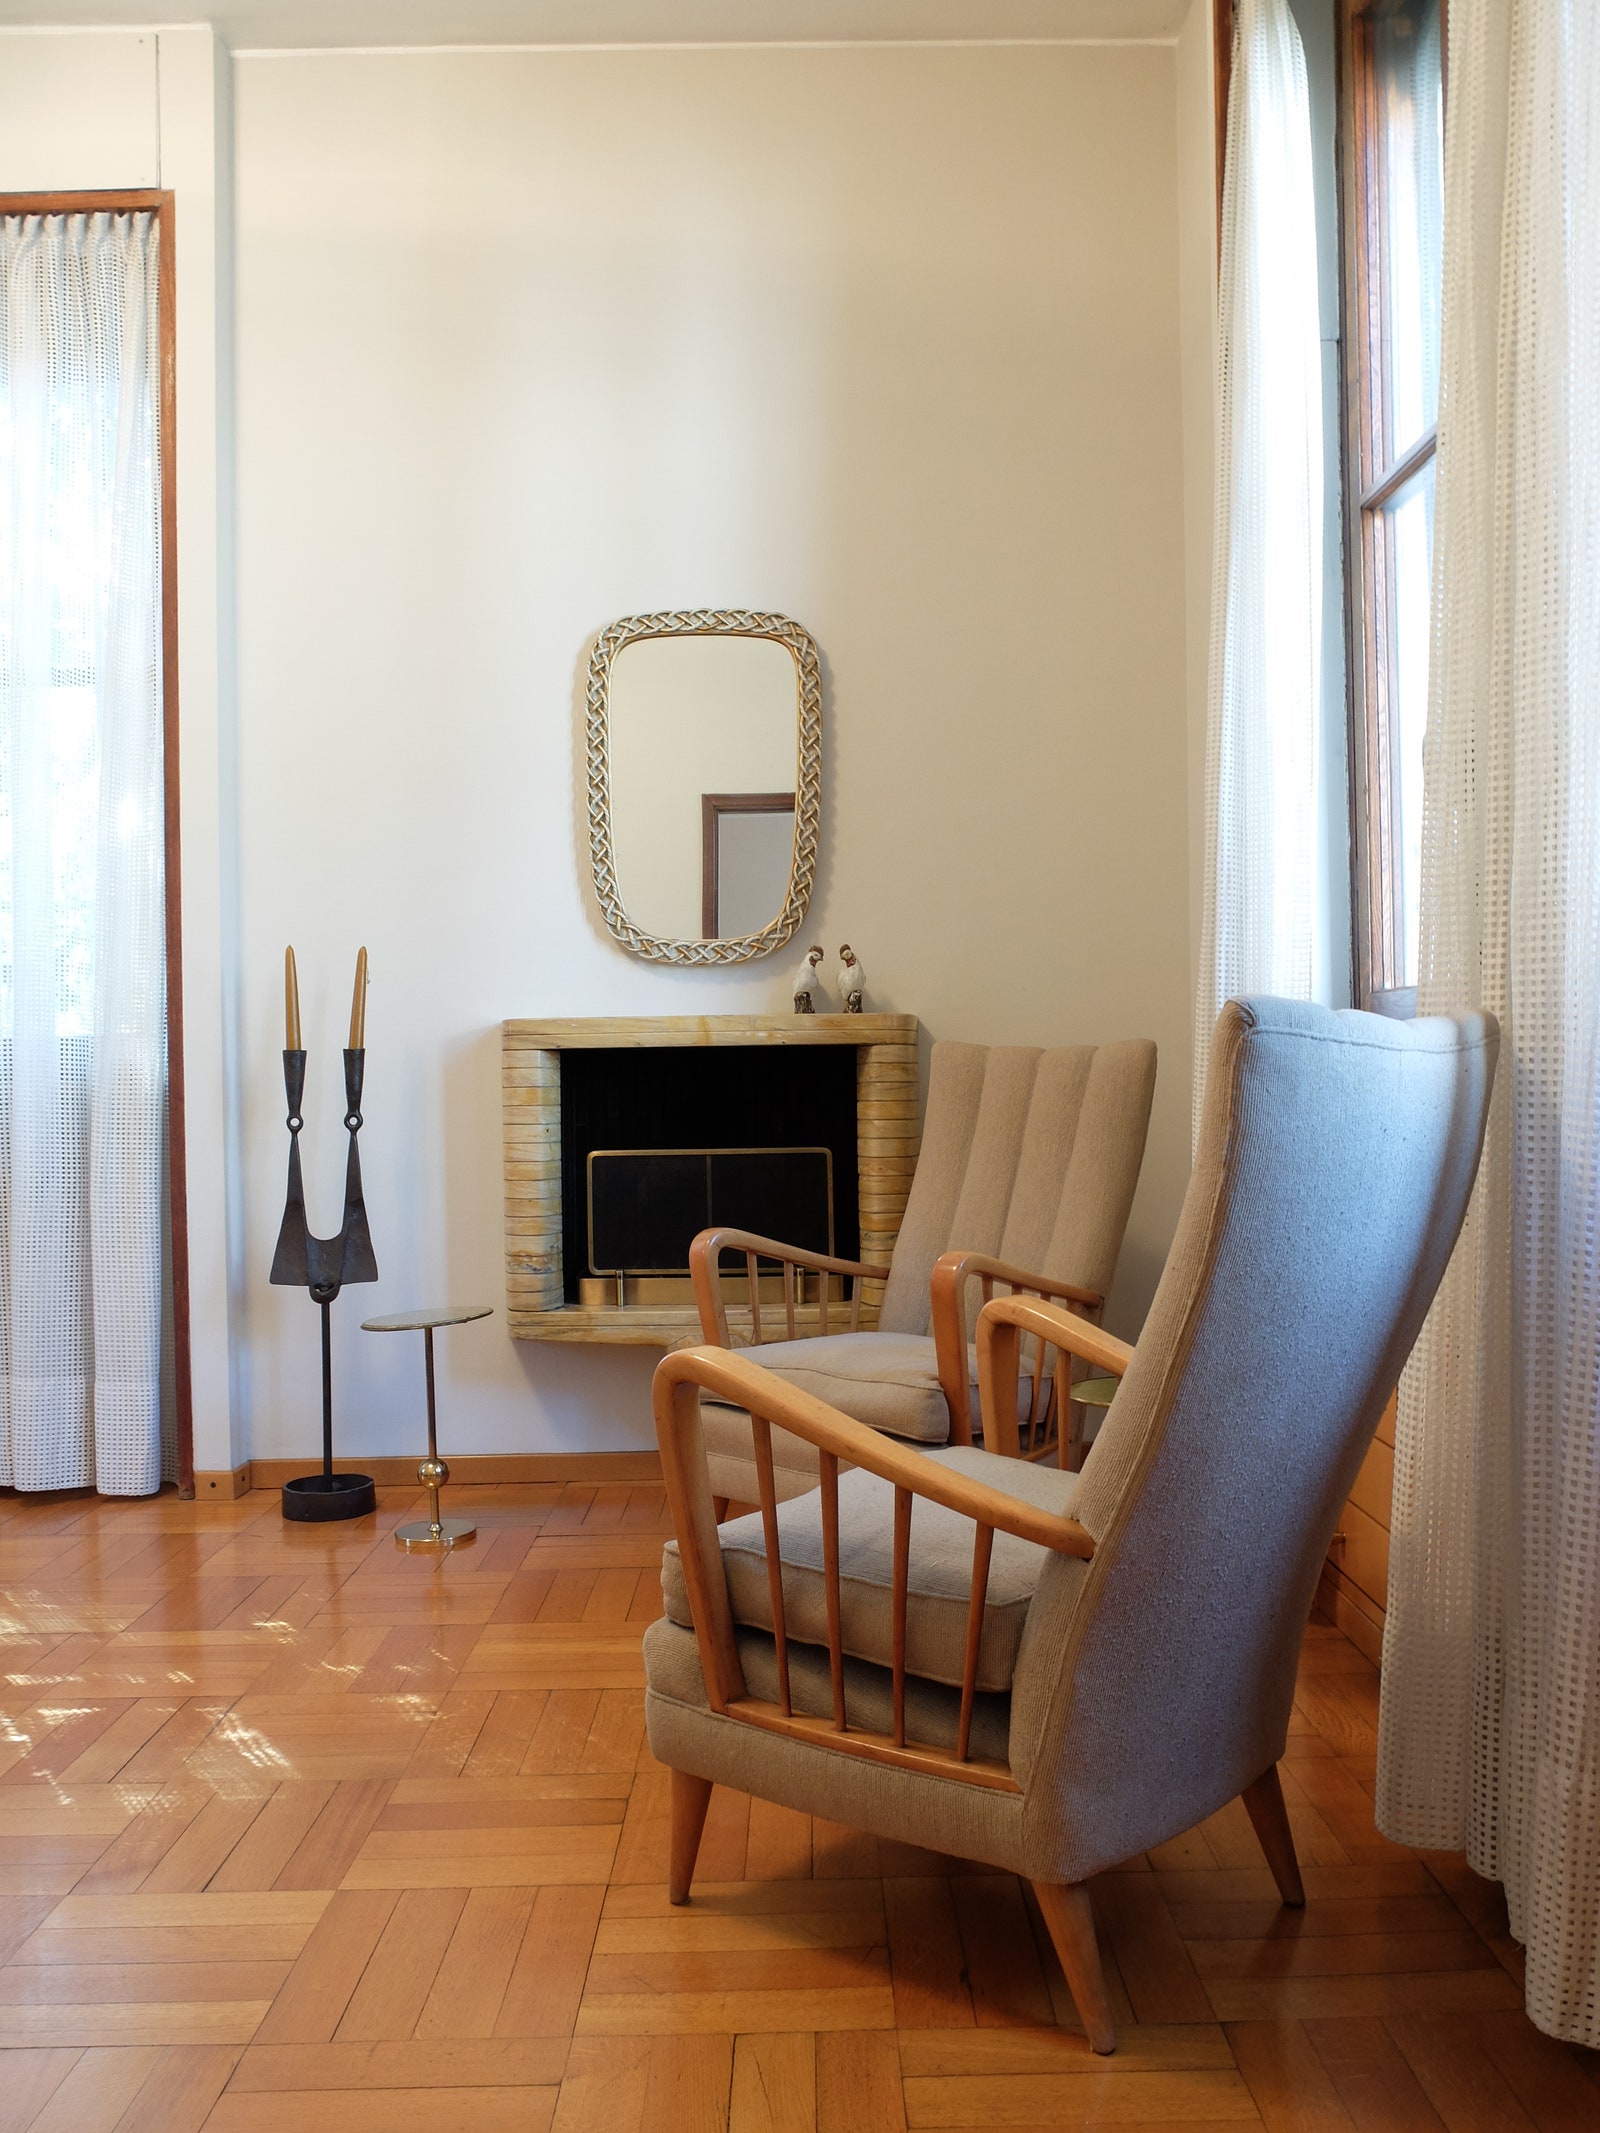 A pair of ‘6553 armchairs created for Arredamenti Borsani the designer's company in 1945